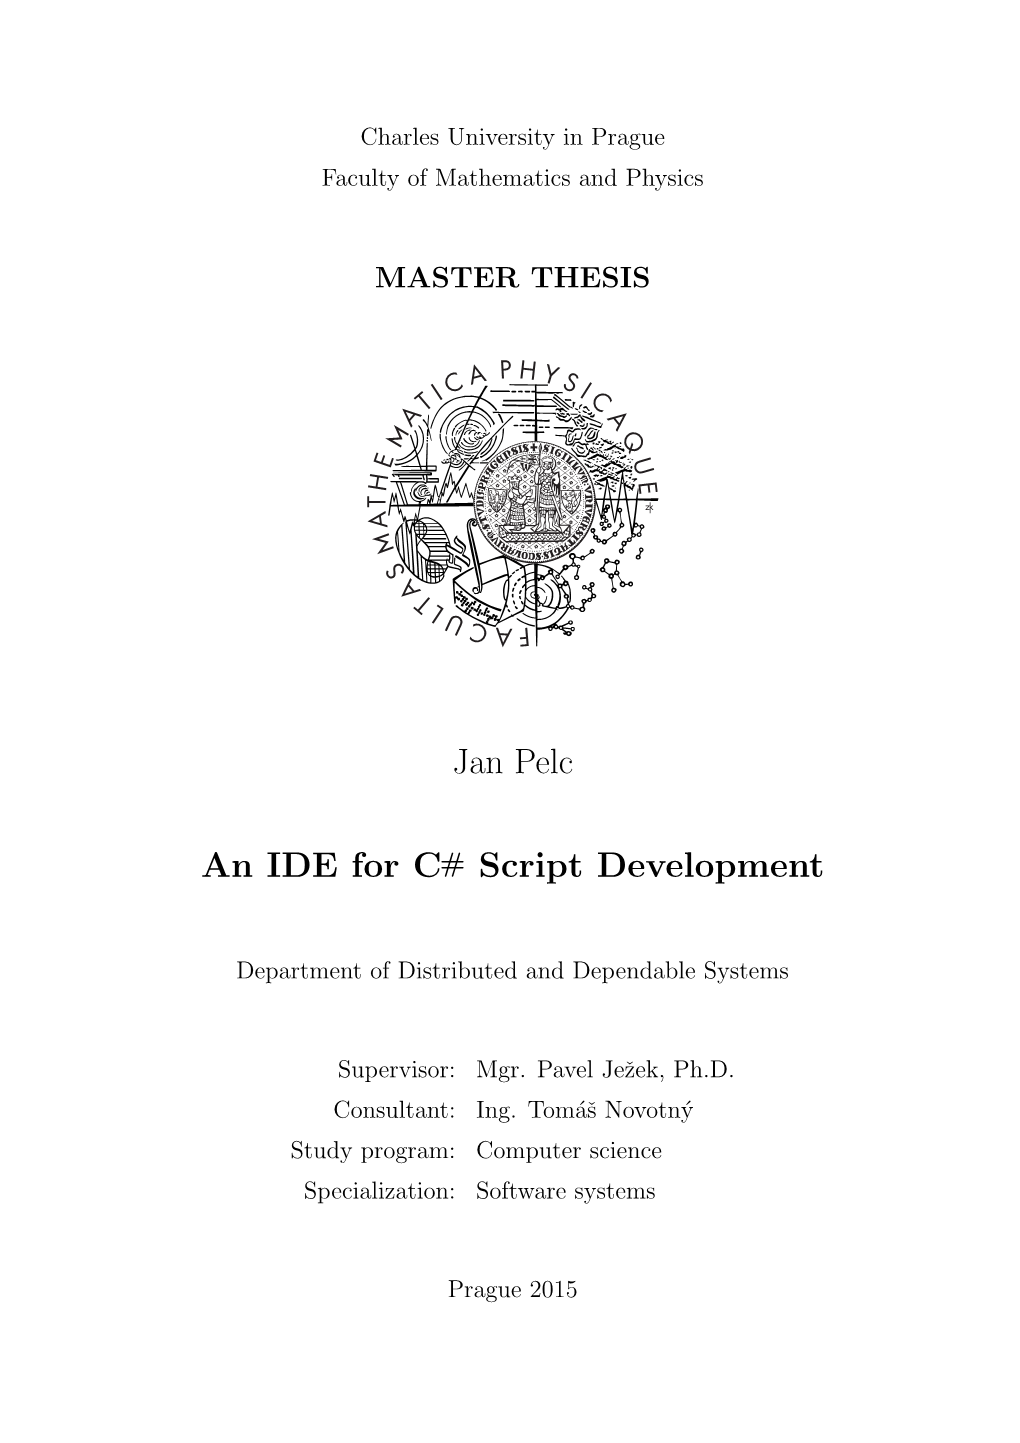 An IDE for C# Script Development